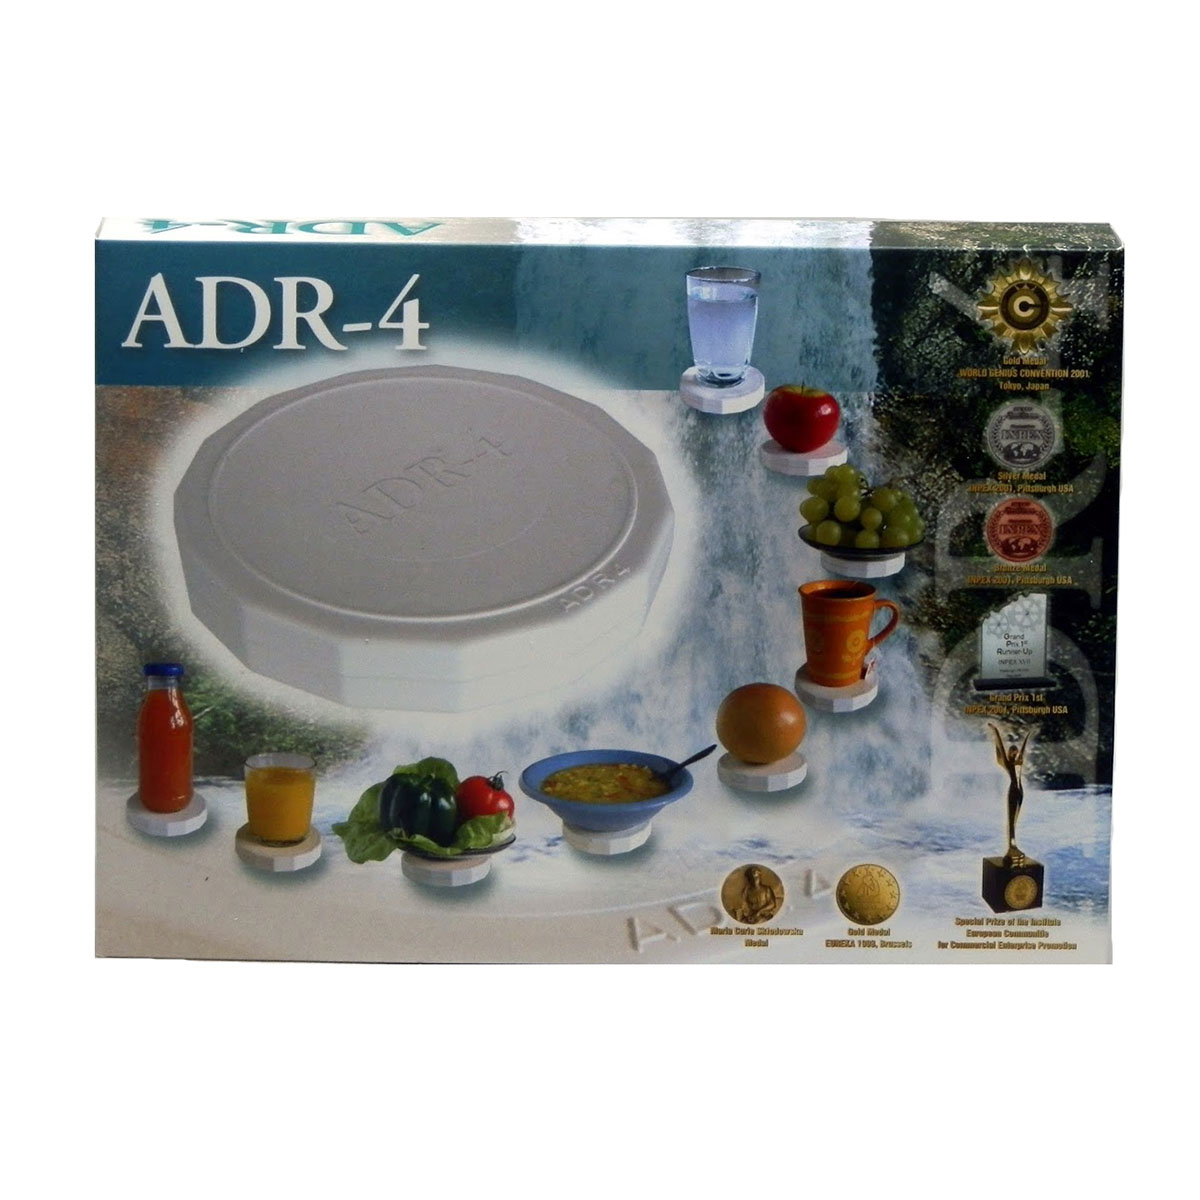 ADR-4 Harmonizer